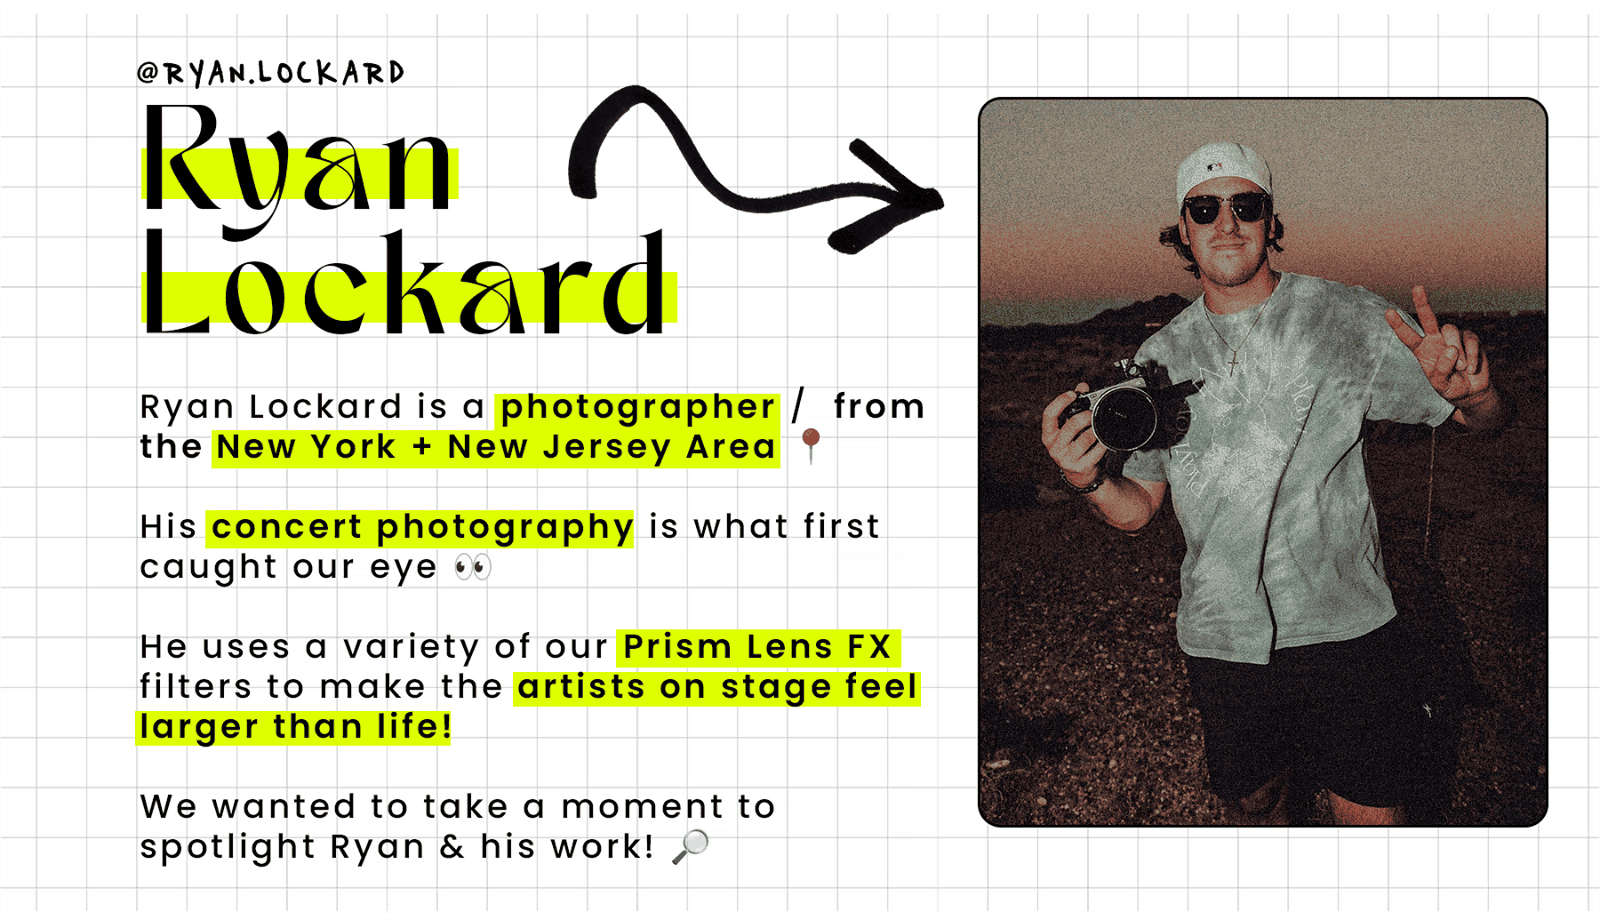 Here is a quick bio on Ryan Lockard!